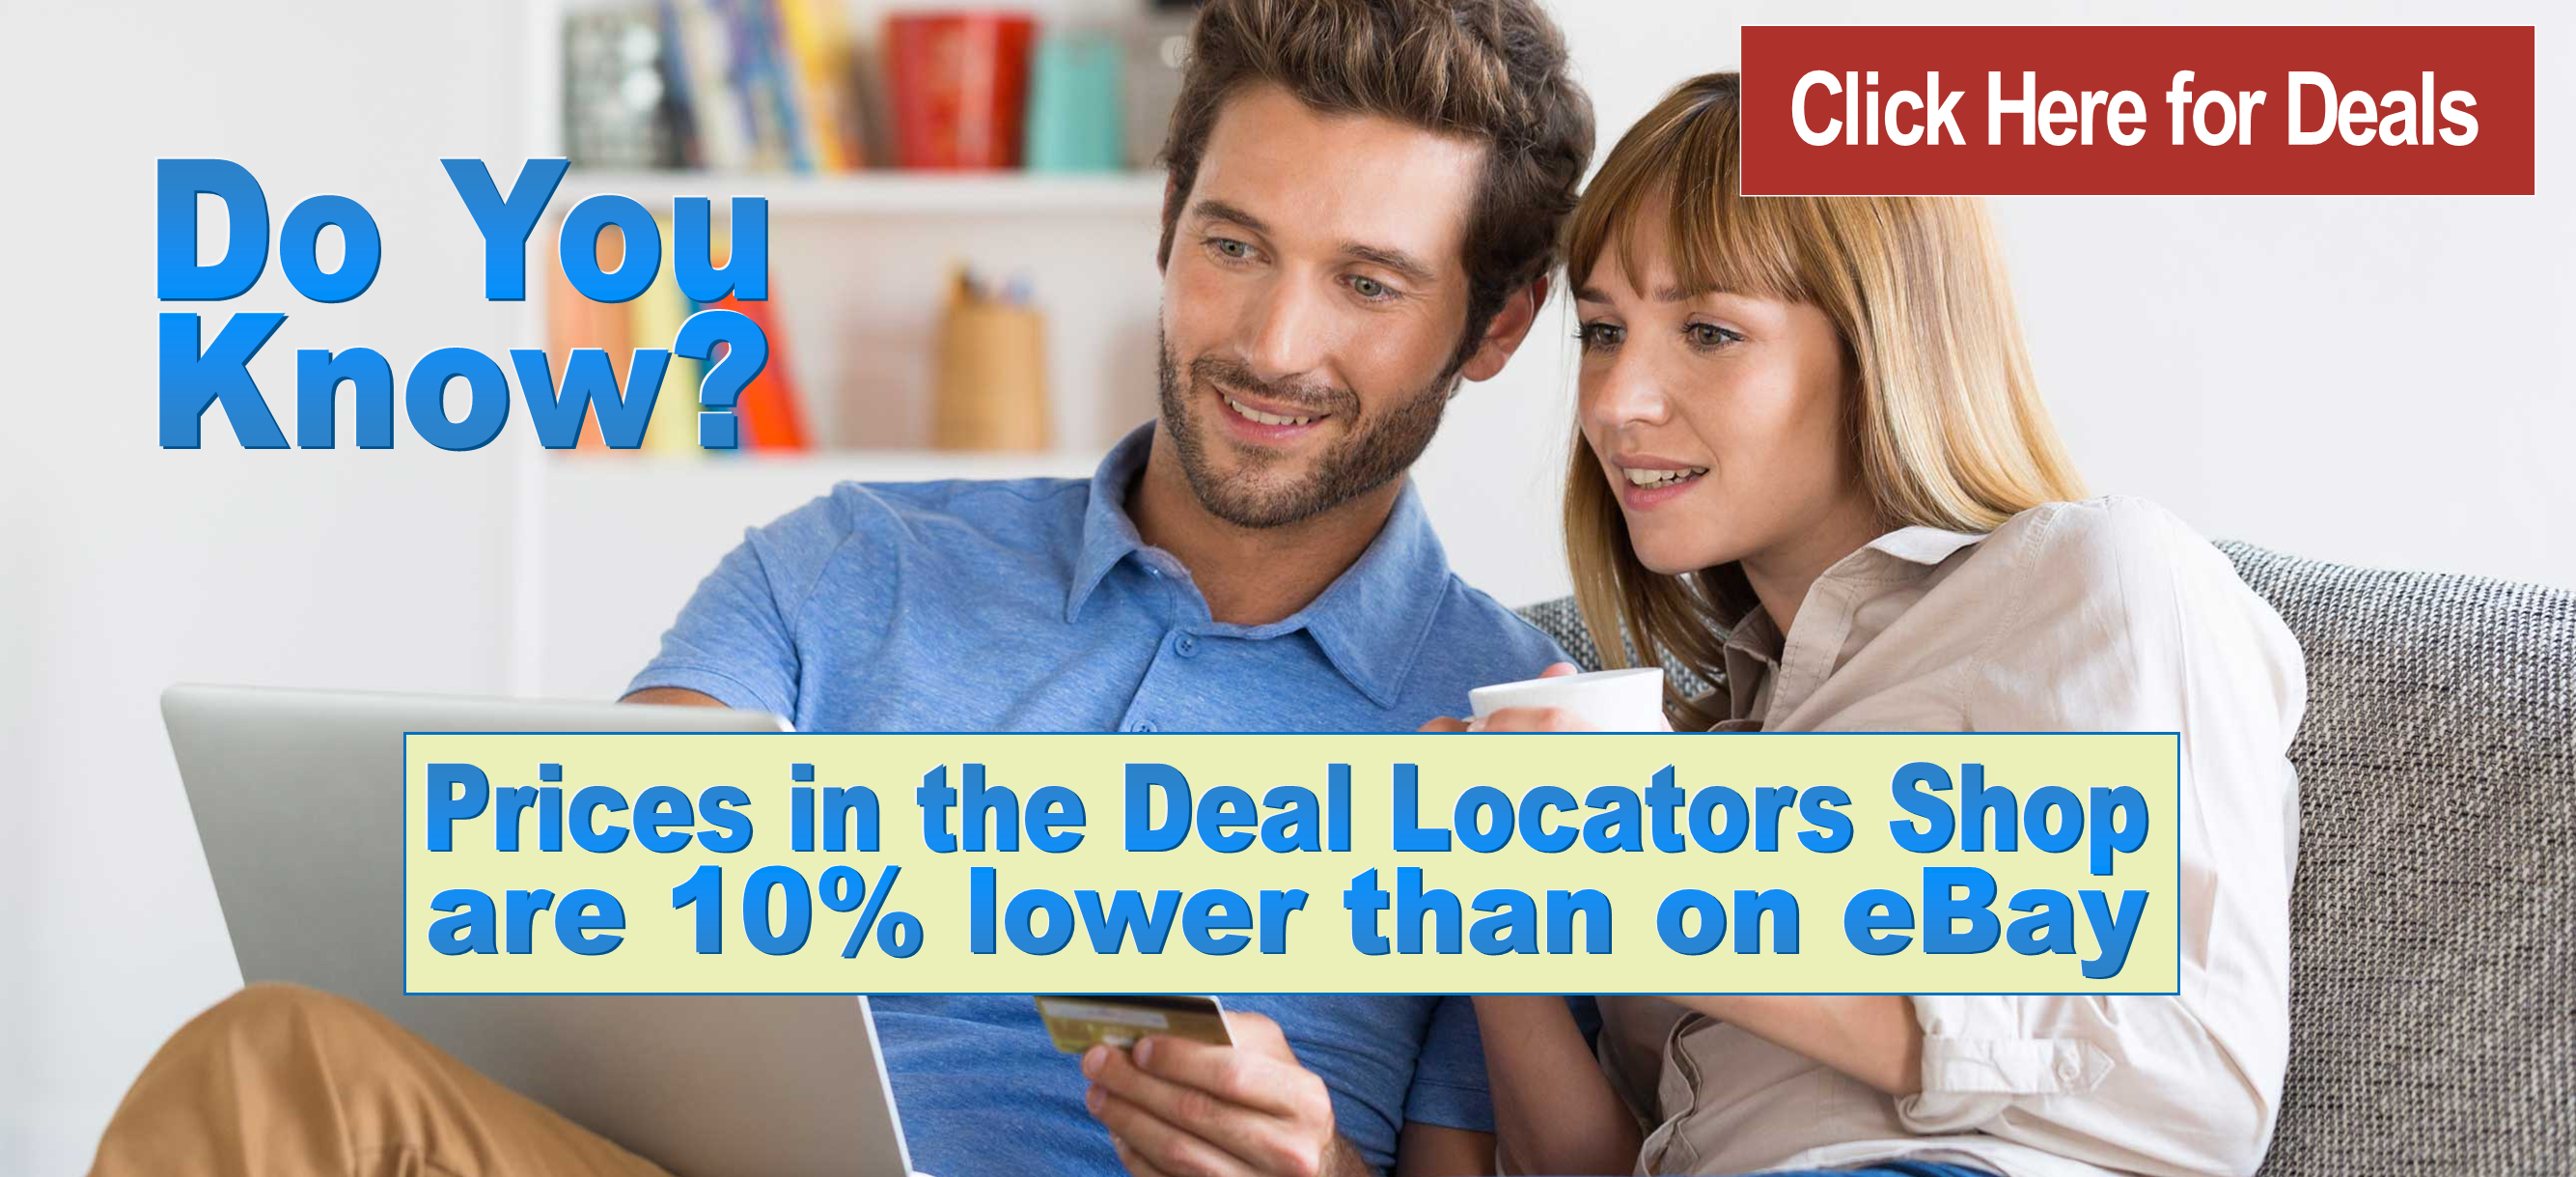 The Deal Locators shop 10% cheaper than eBay